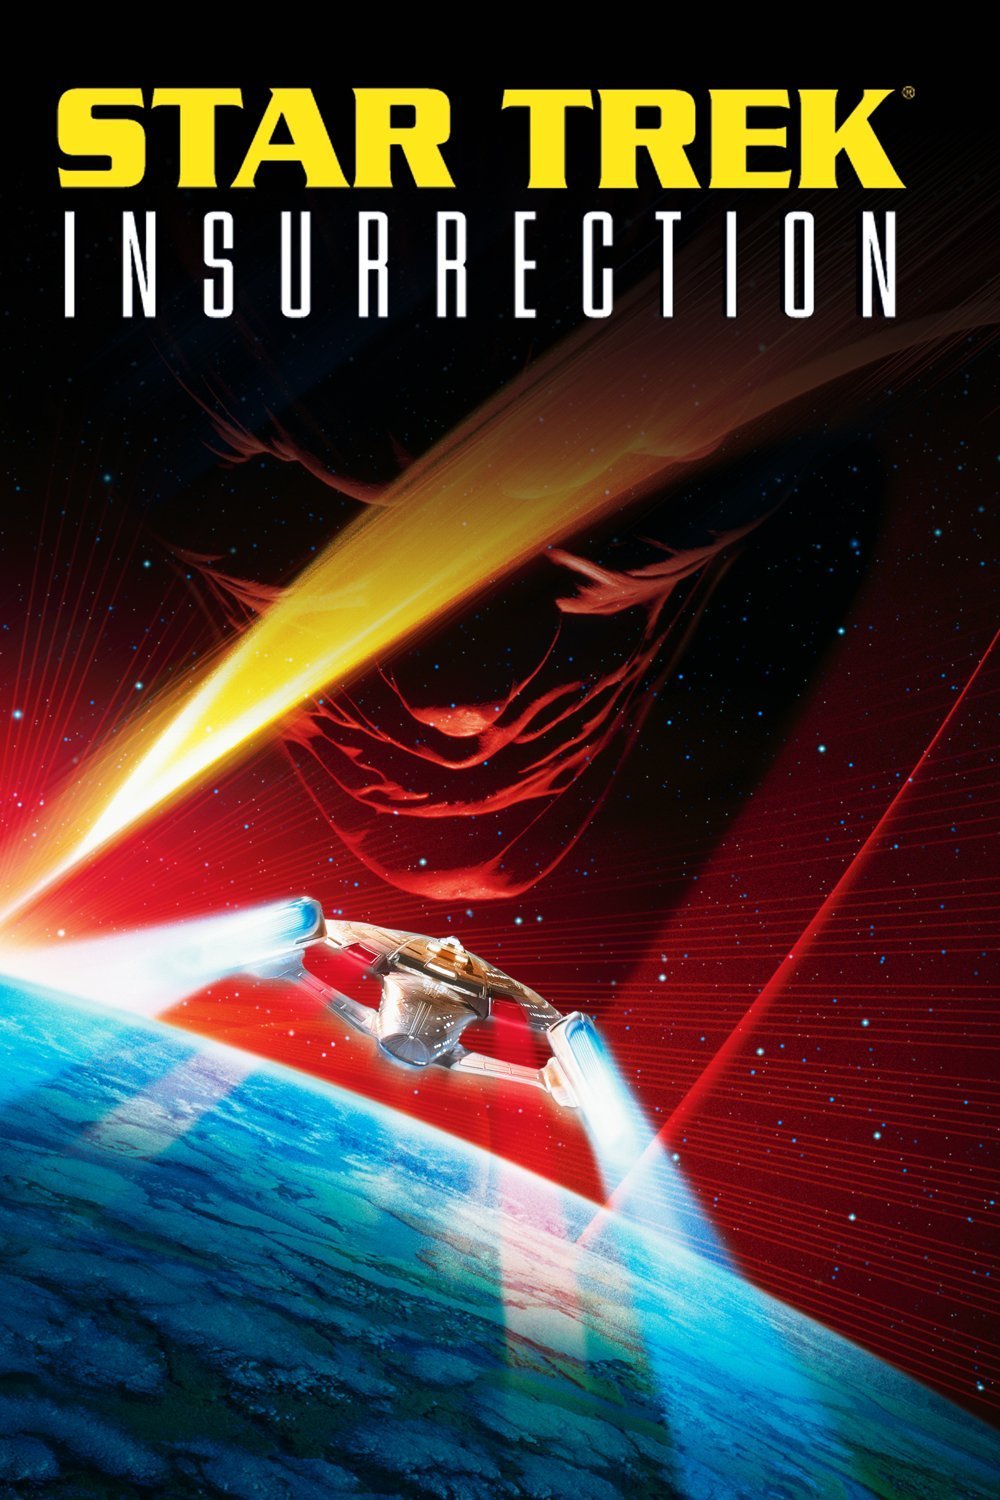 Amazing Star Trek: Insurrection Pictures & Backgrounds